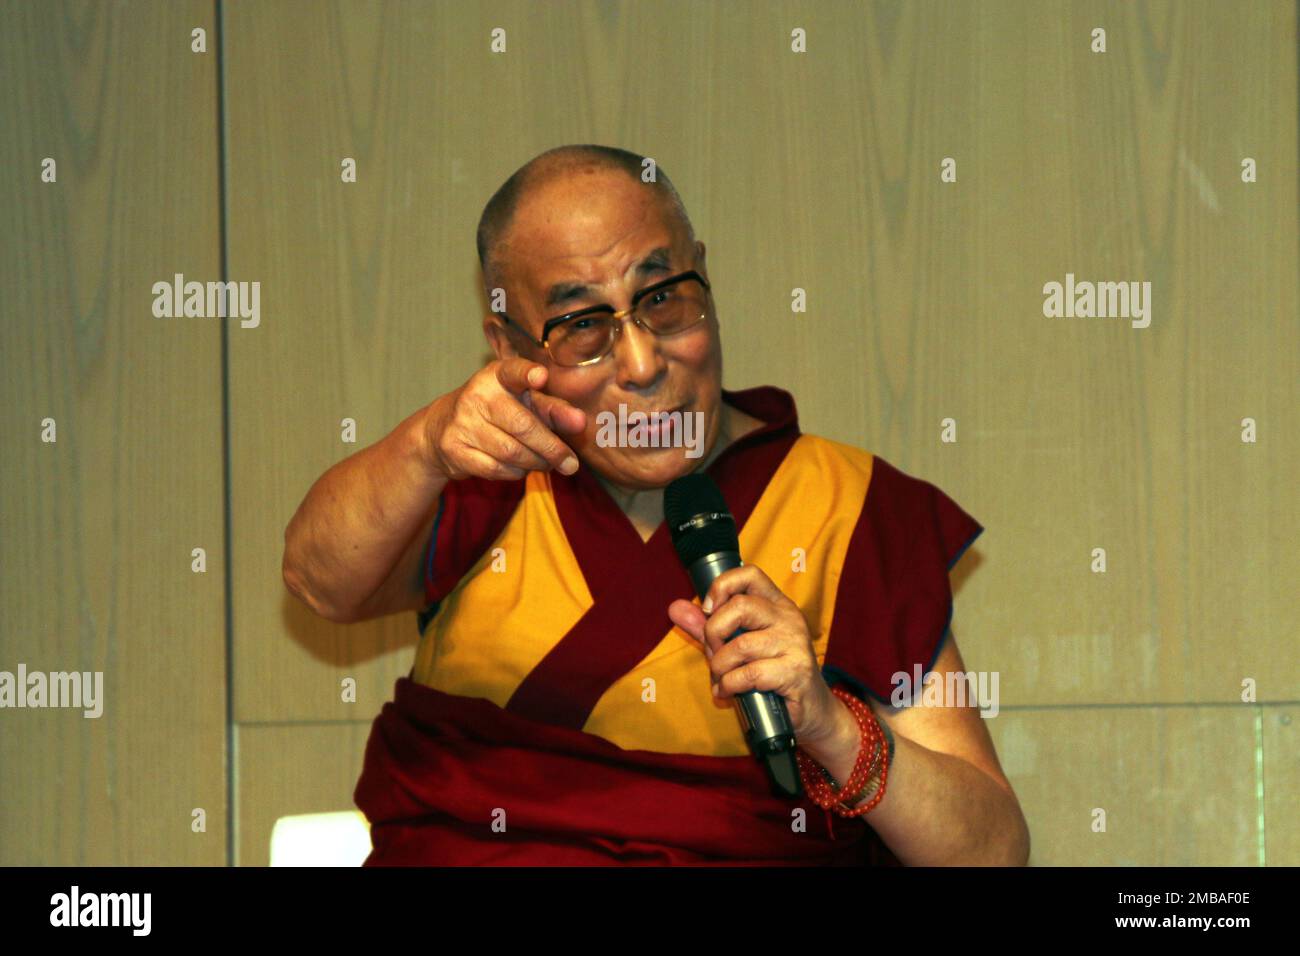 Dalai Lama en Hamburgo con Kongress 'Achtsamkeit' Foto de stock